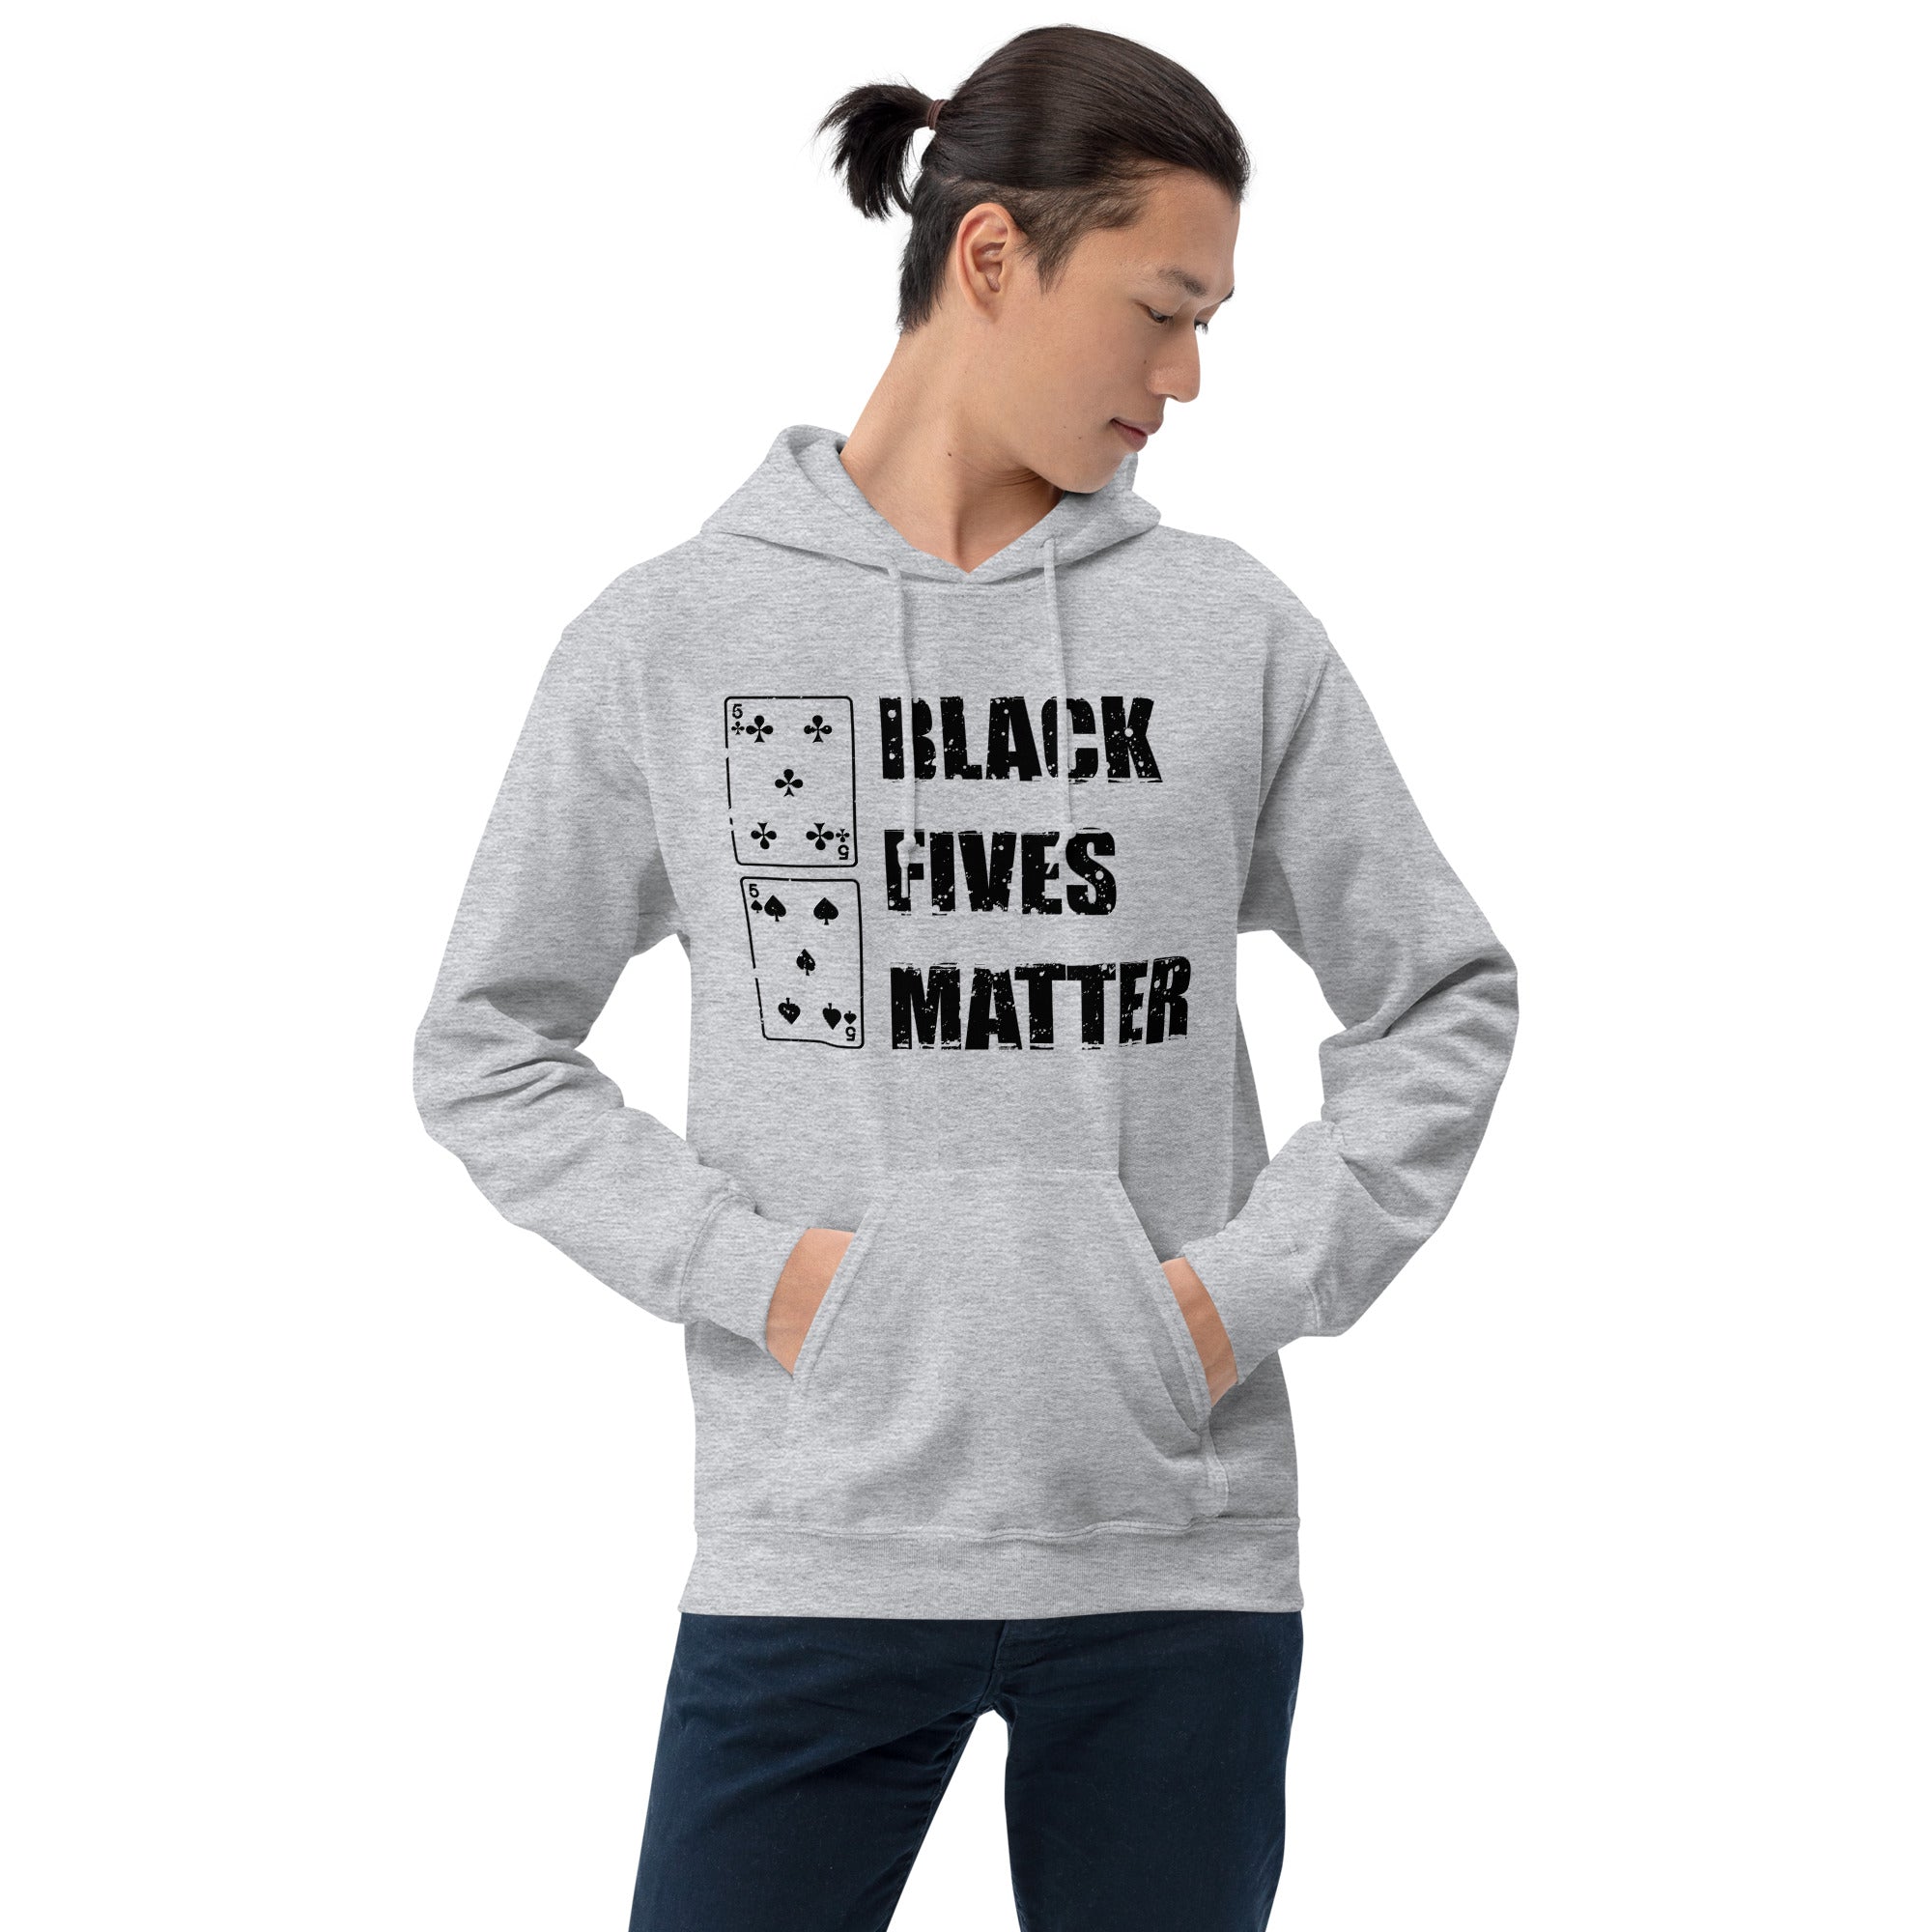 Black Fives Matter - Unisex Hoodie